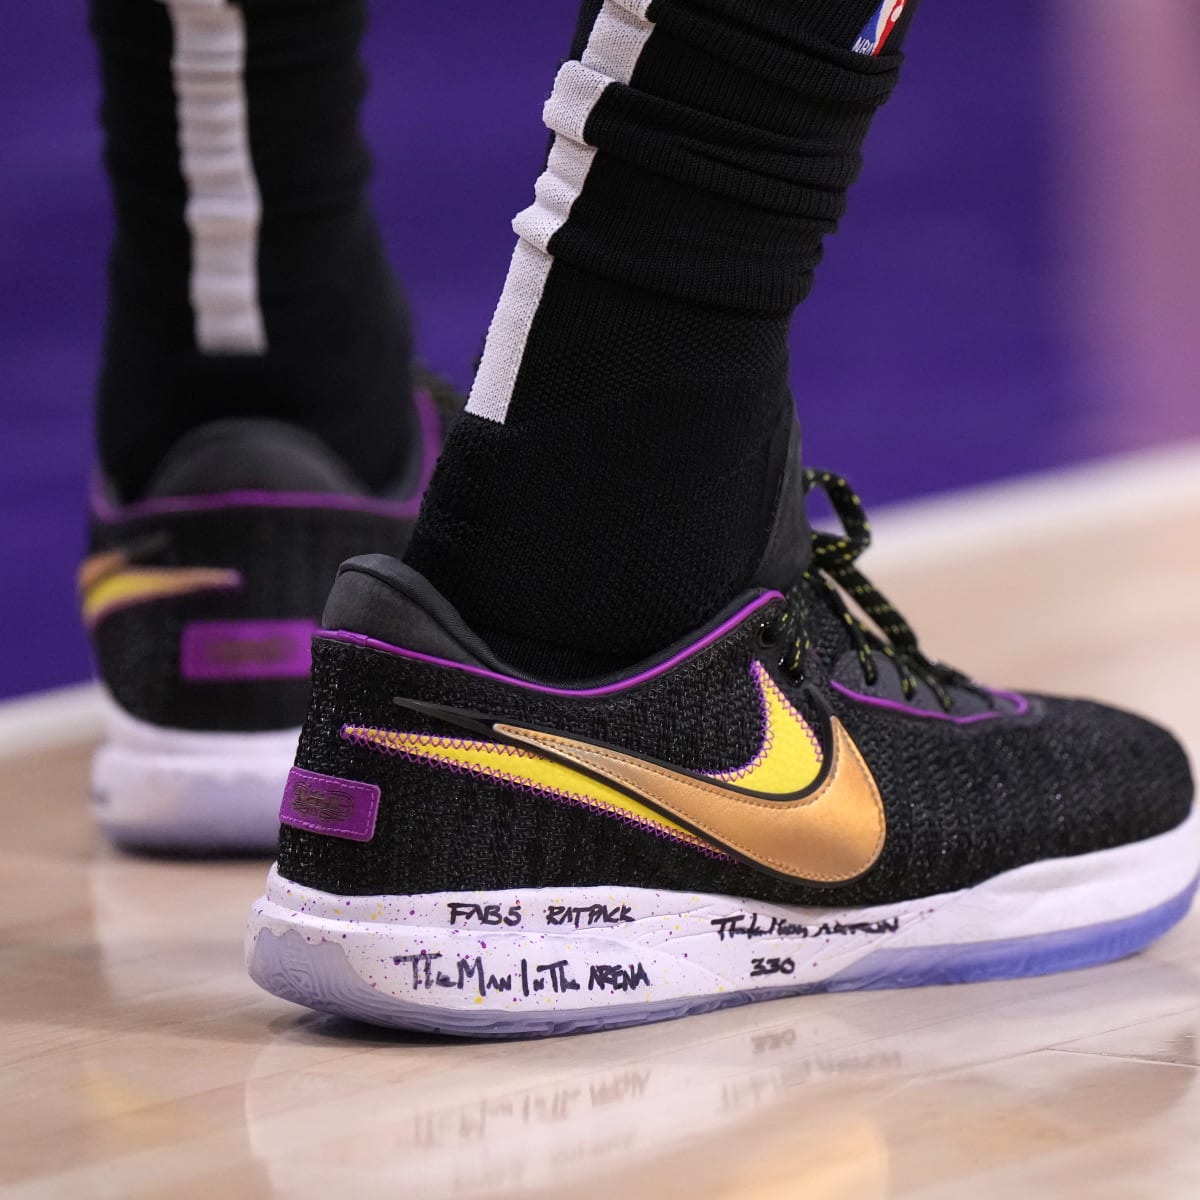 LeBron James Wears Nike LeBron 20 'Lakers' Colorway - Sports